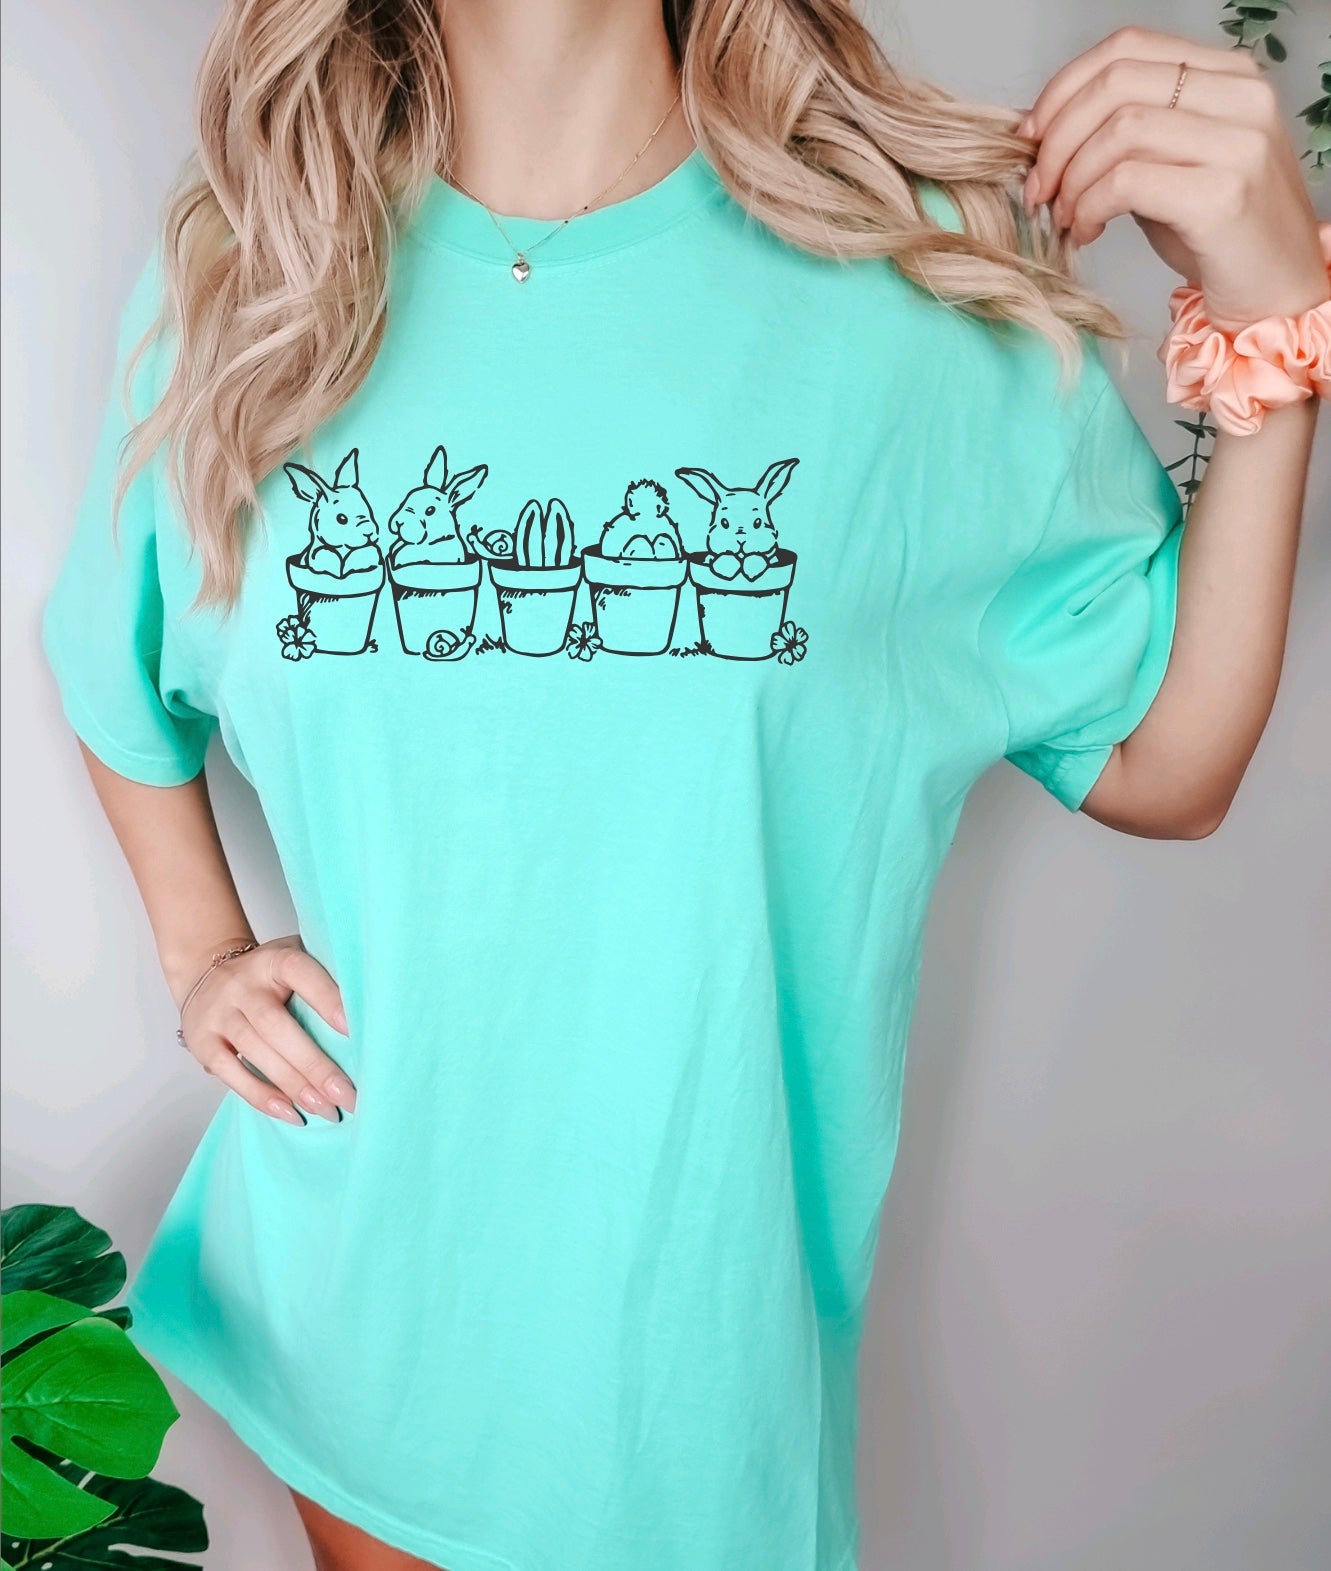 Bunnies in flower pots comfort colors Easter t-shirt for women in island reef